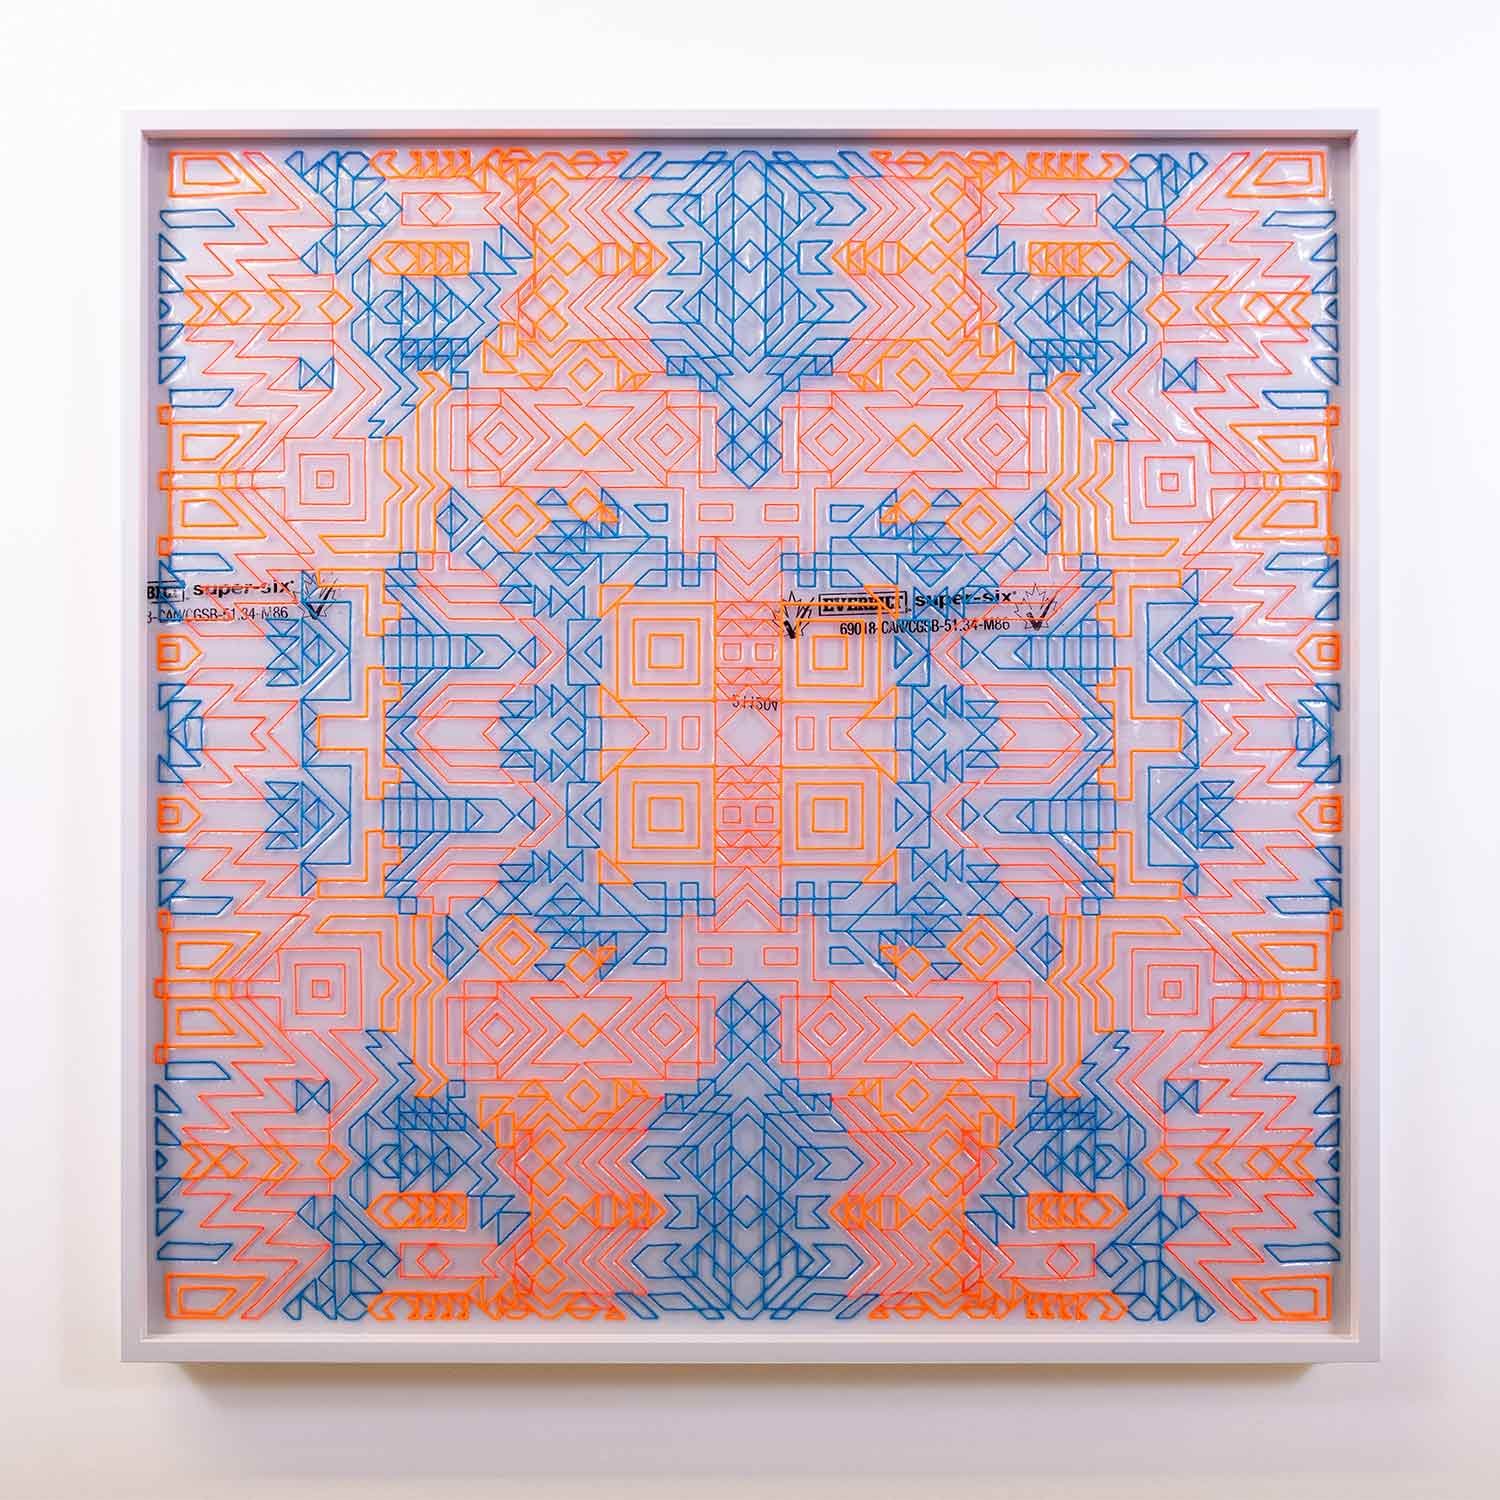 Caroline Monnet, Ossature 02, 2022, Embroidery on polyethylene, 36 x 36 in. (Copy)